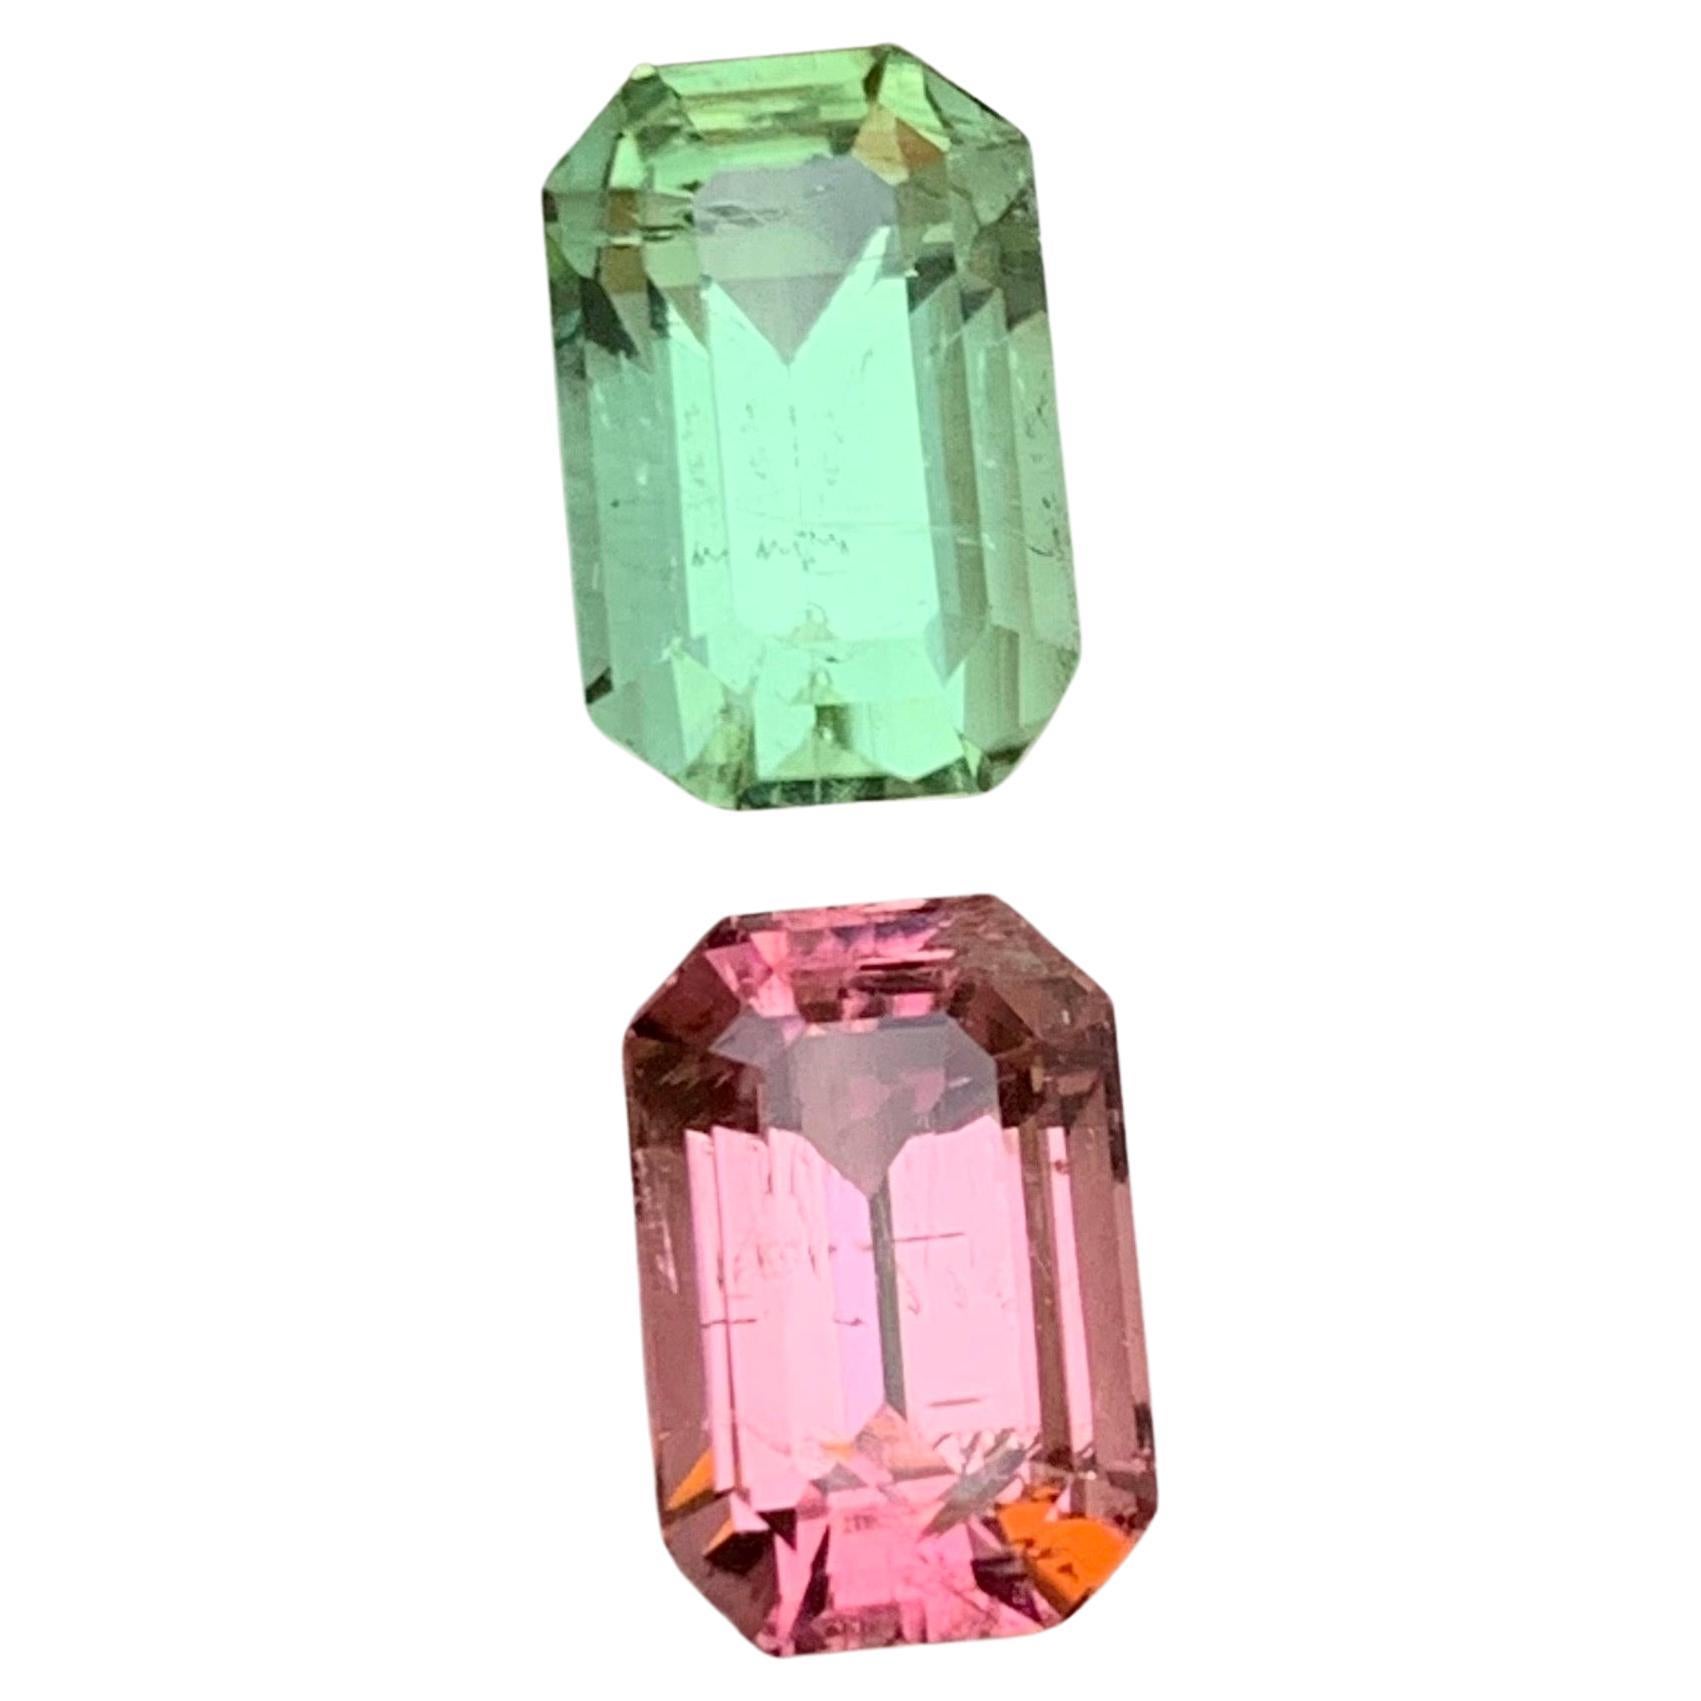 Rare Mint Green & Pink Natural Tourmaline Gemstones, 5.60 Ct Emerald Cut-Jewelry